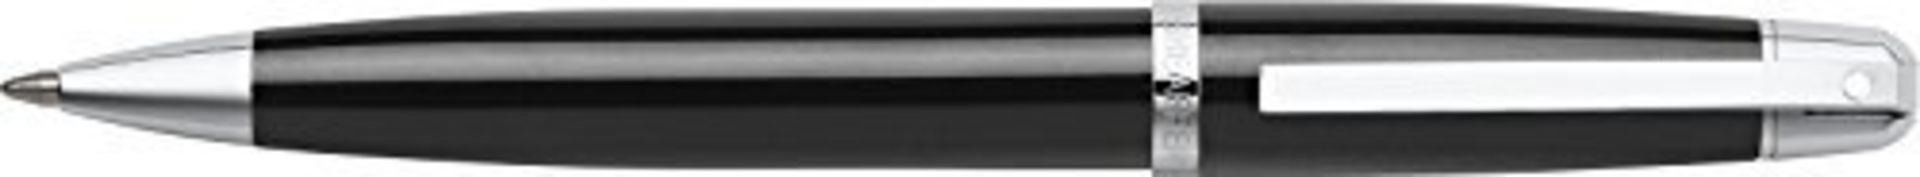 V Brand New Black Sheaffer 500 Ball Point Pen With Chrome Trim ISP £50 (Jarrold.co.uk) X 2 YOUR